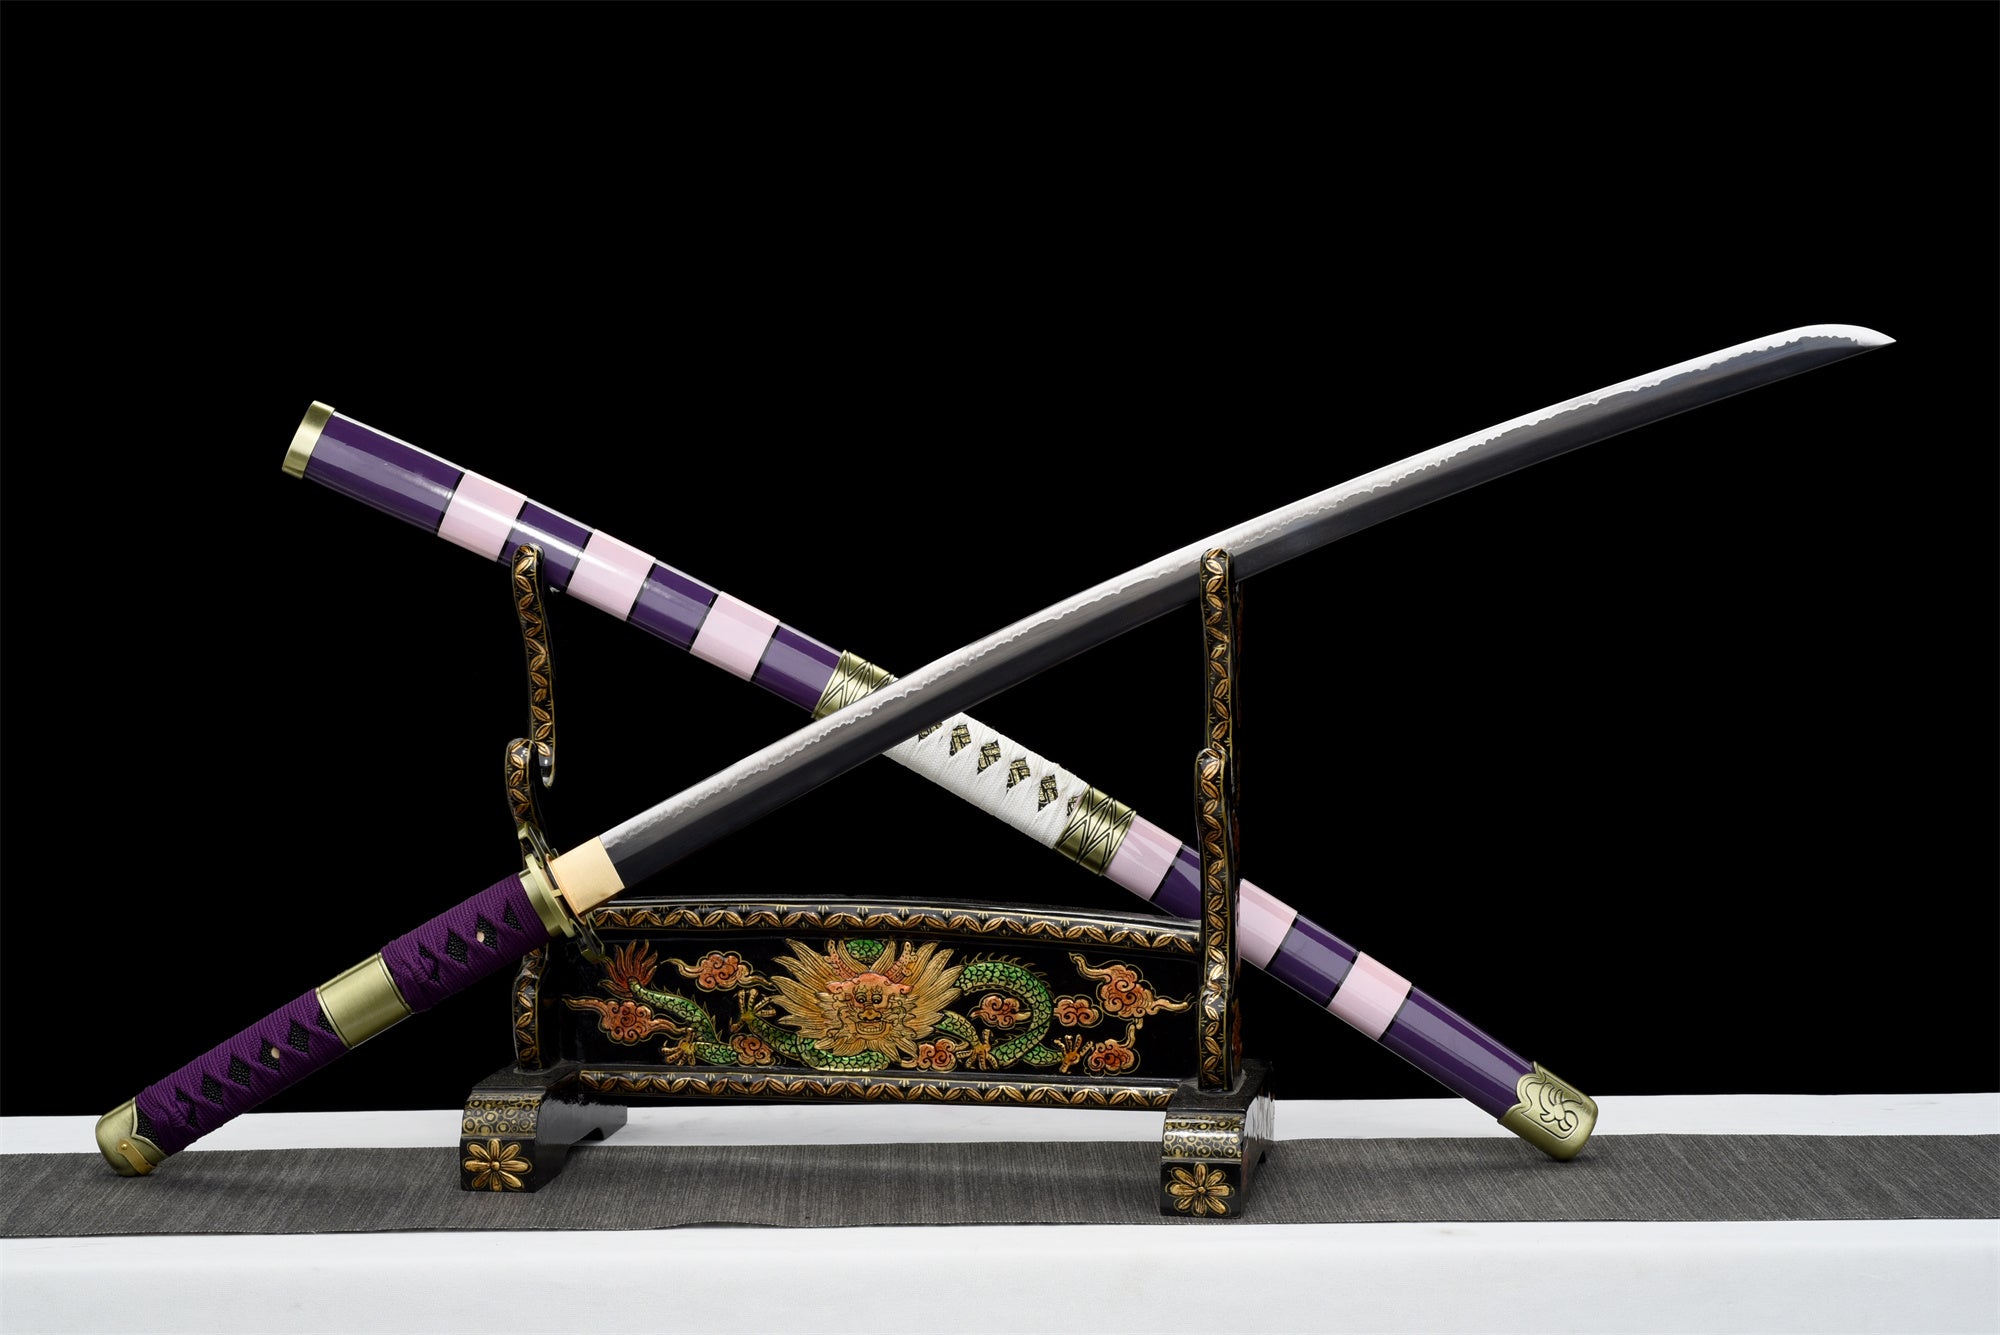 Anime Sword,One Piece,Black Blade,Real Japanese Samurai Sword,Handmade Anime Katana,High-carbon steel